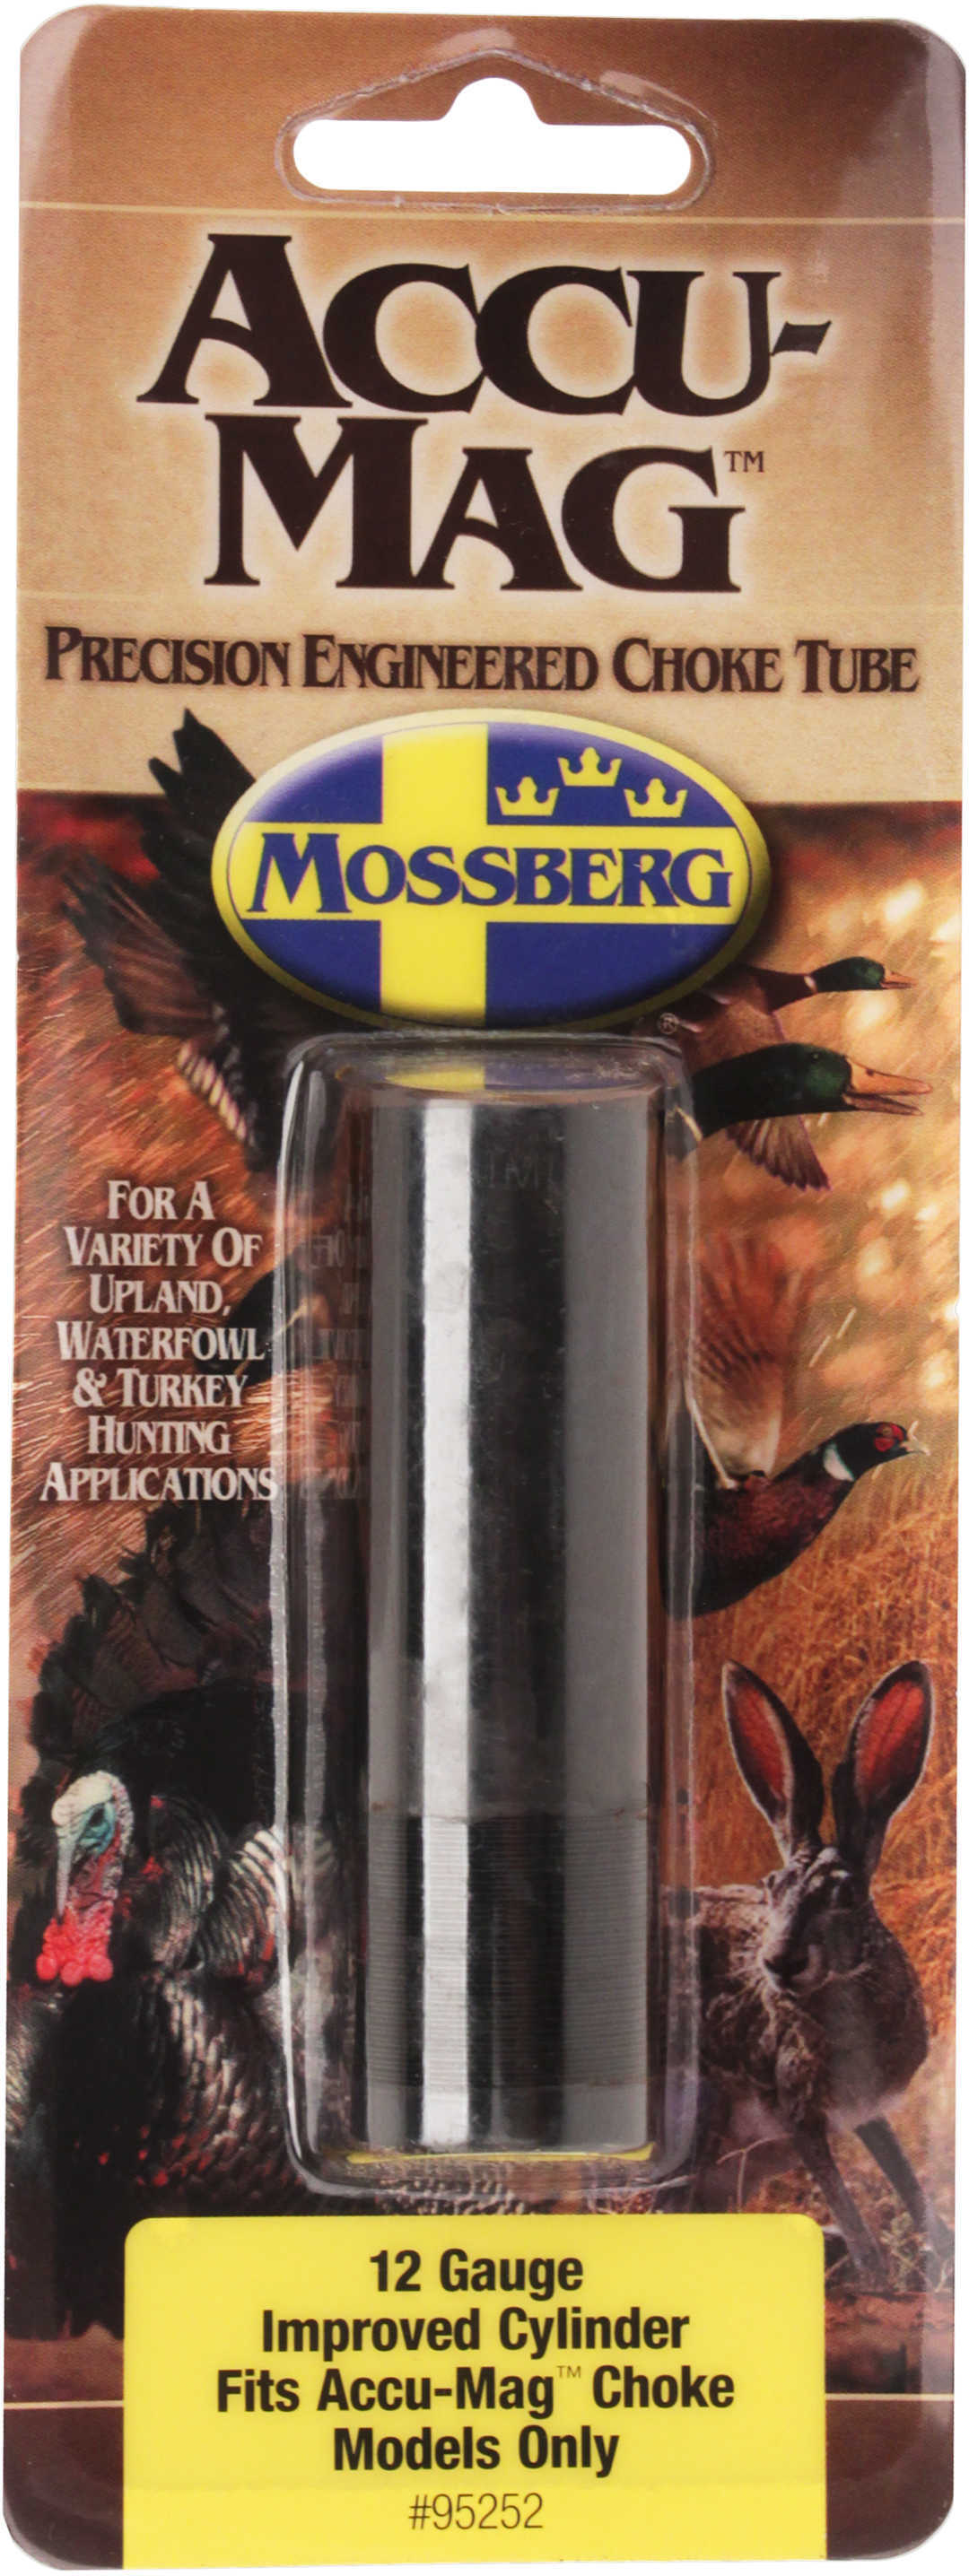 Mossberg Accu-Mag Choke Tube 12 Gauge, Improved Cylinder 95252